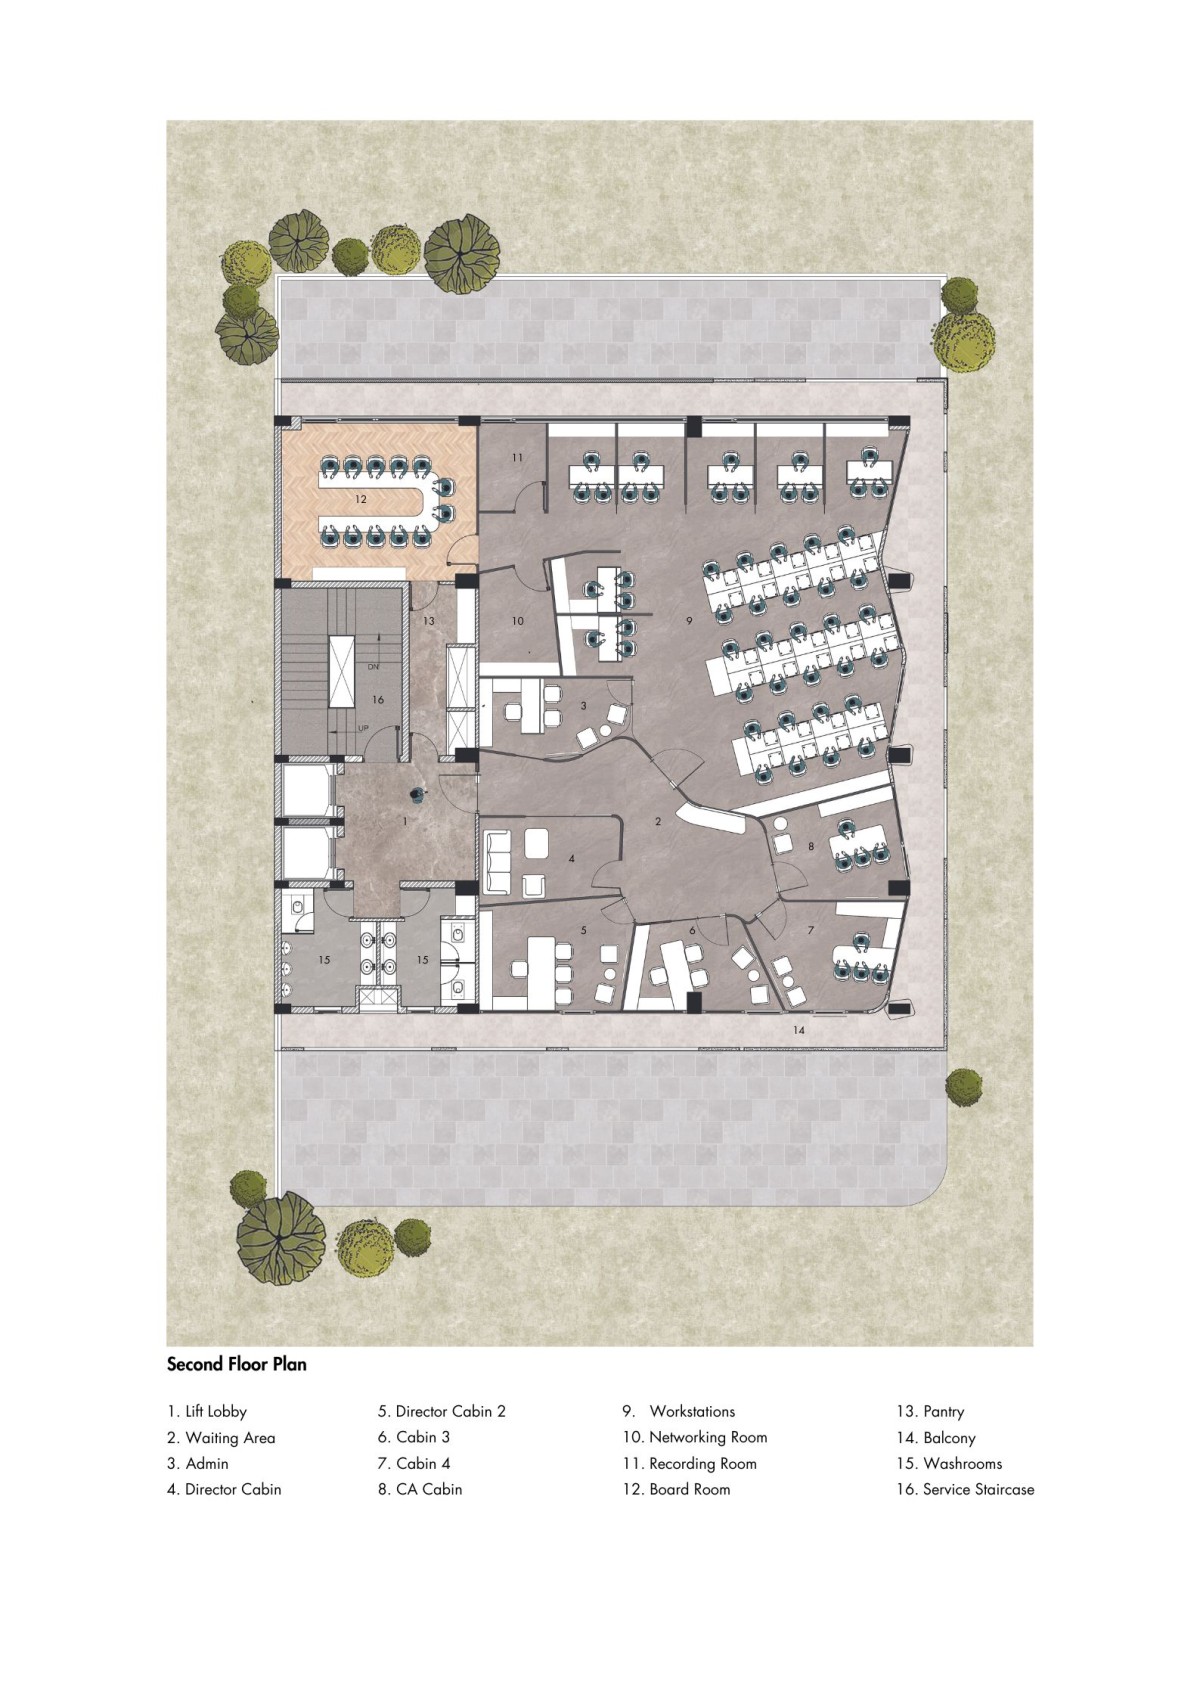 Second Floor Plan of Vornoid by Studio Ardete